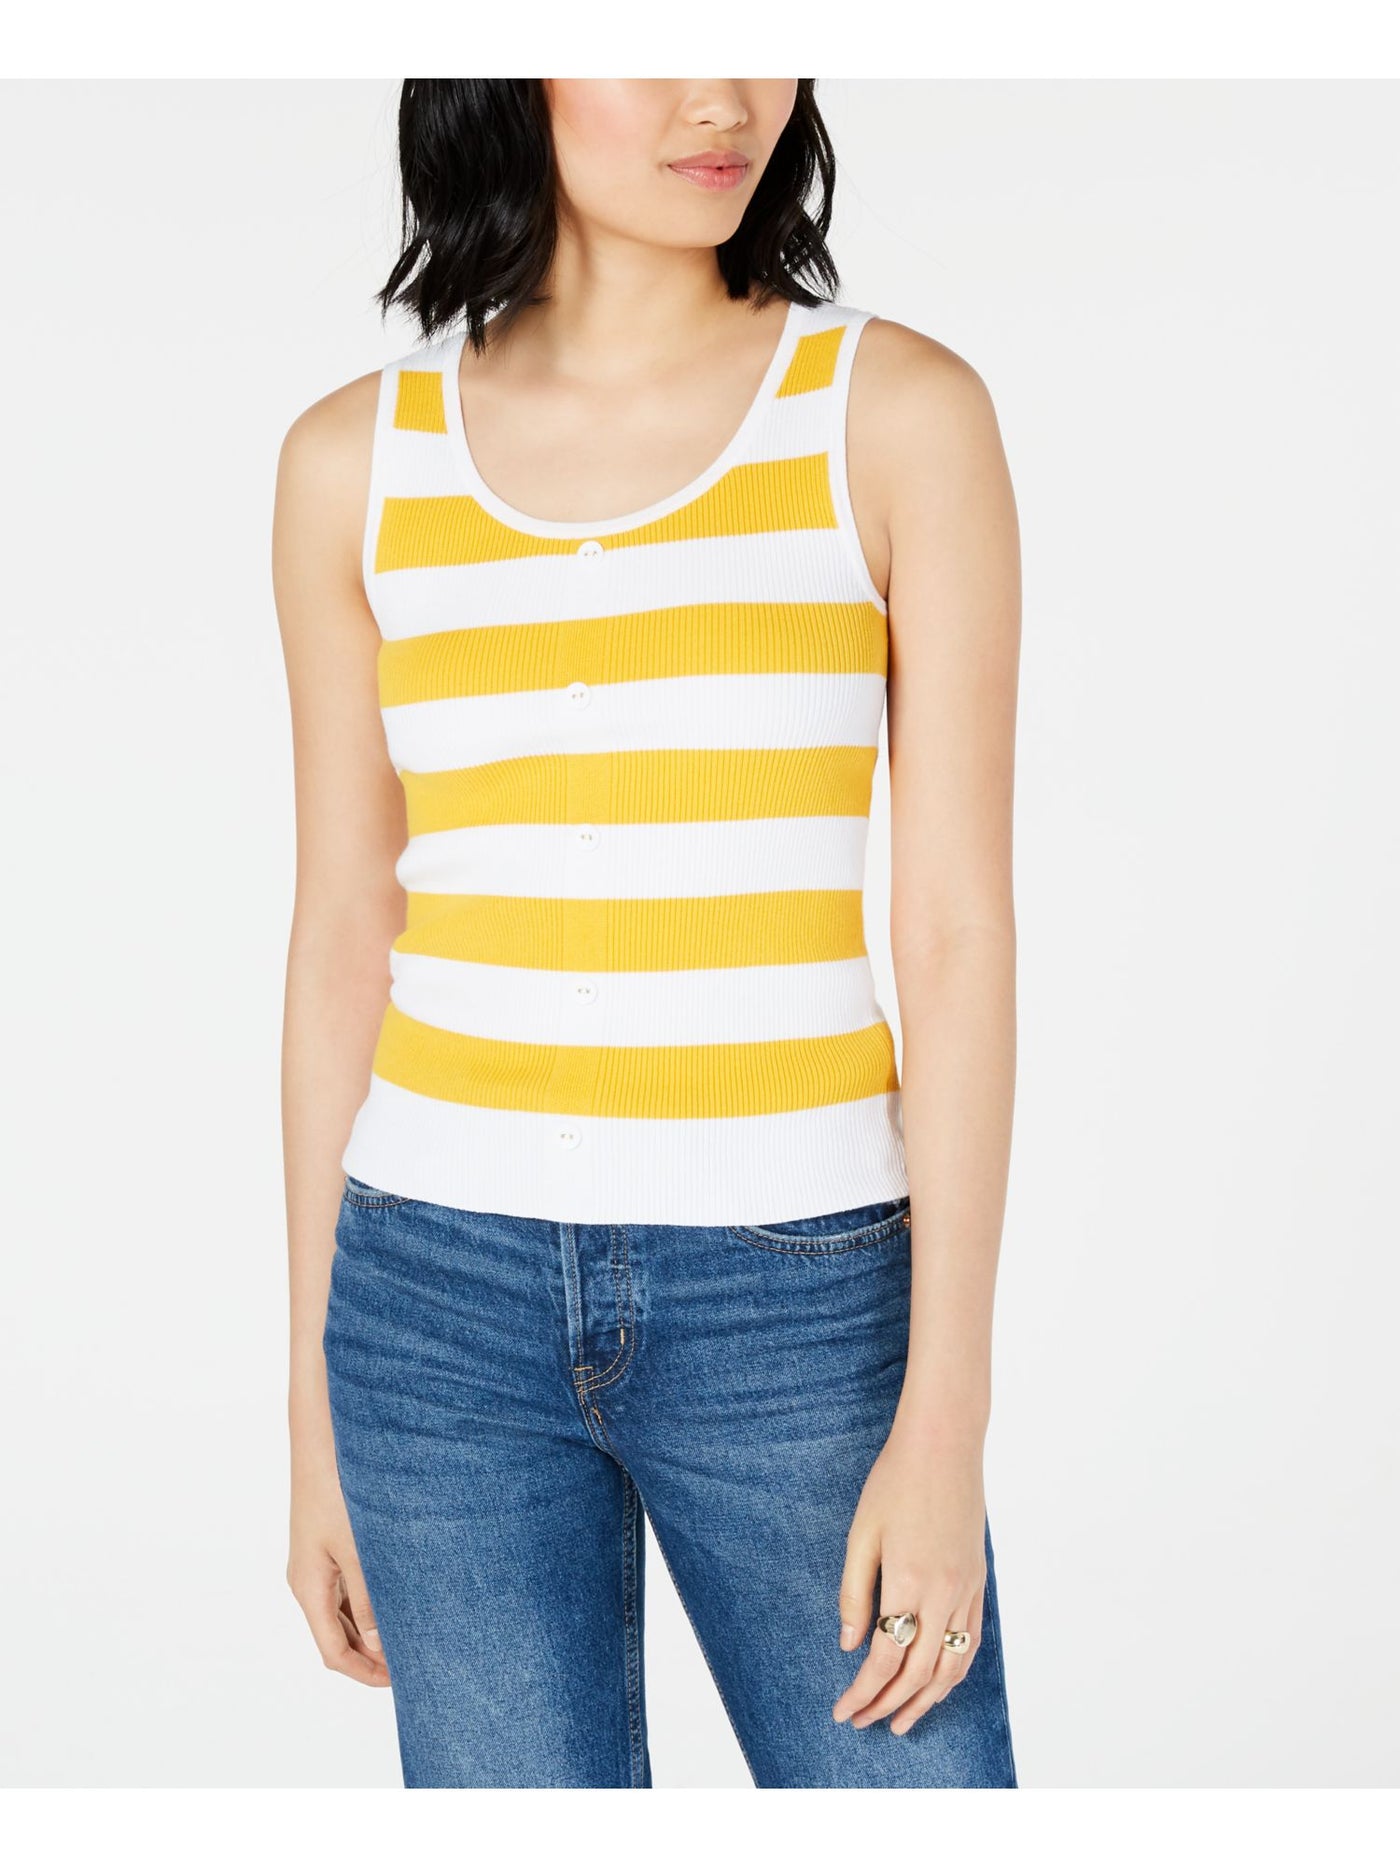 MAISON JULES Womens Gold Striped Sleeveless Scoop Neck Tank Sweater Size: XL